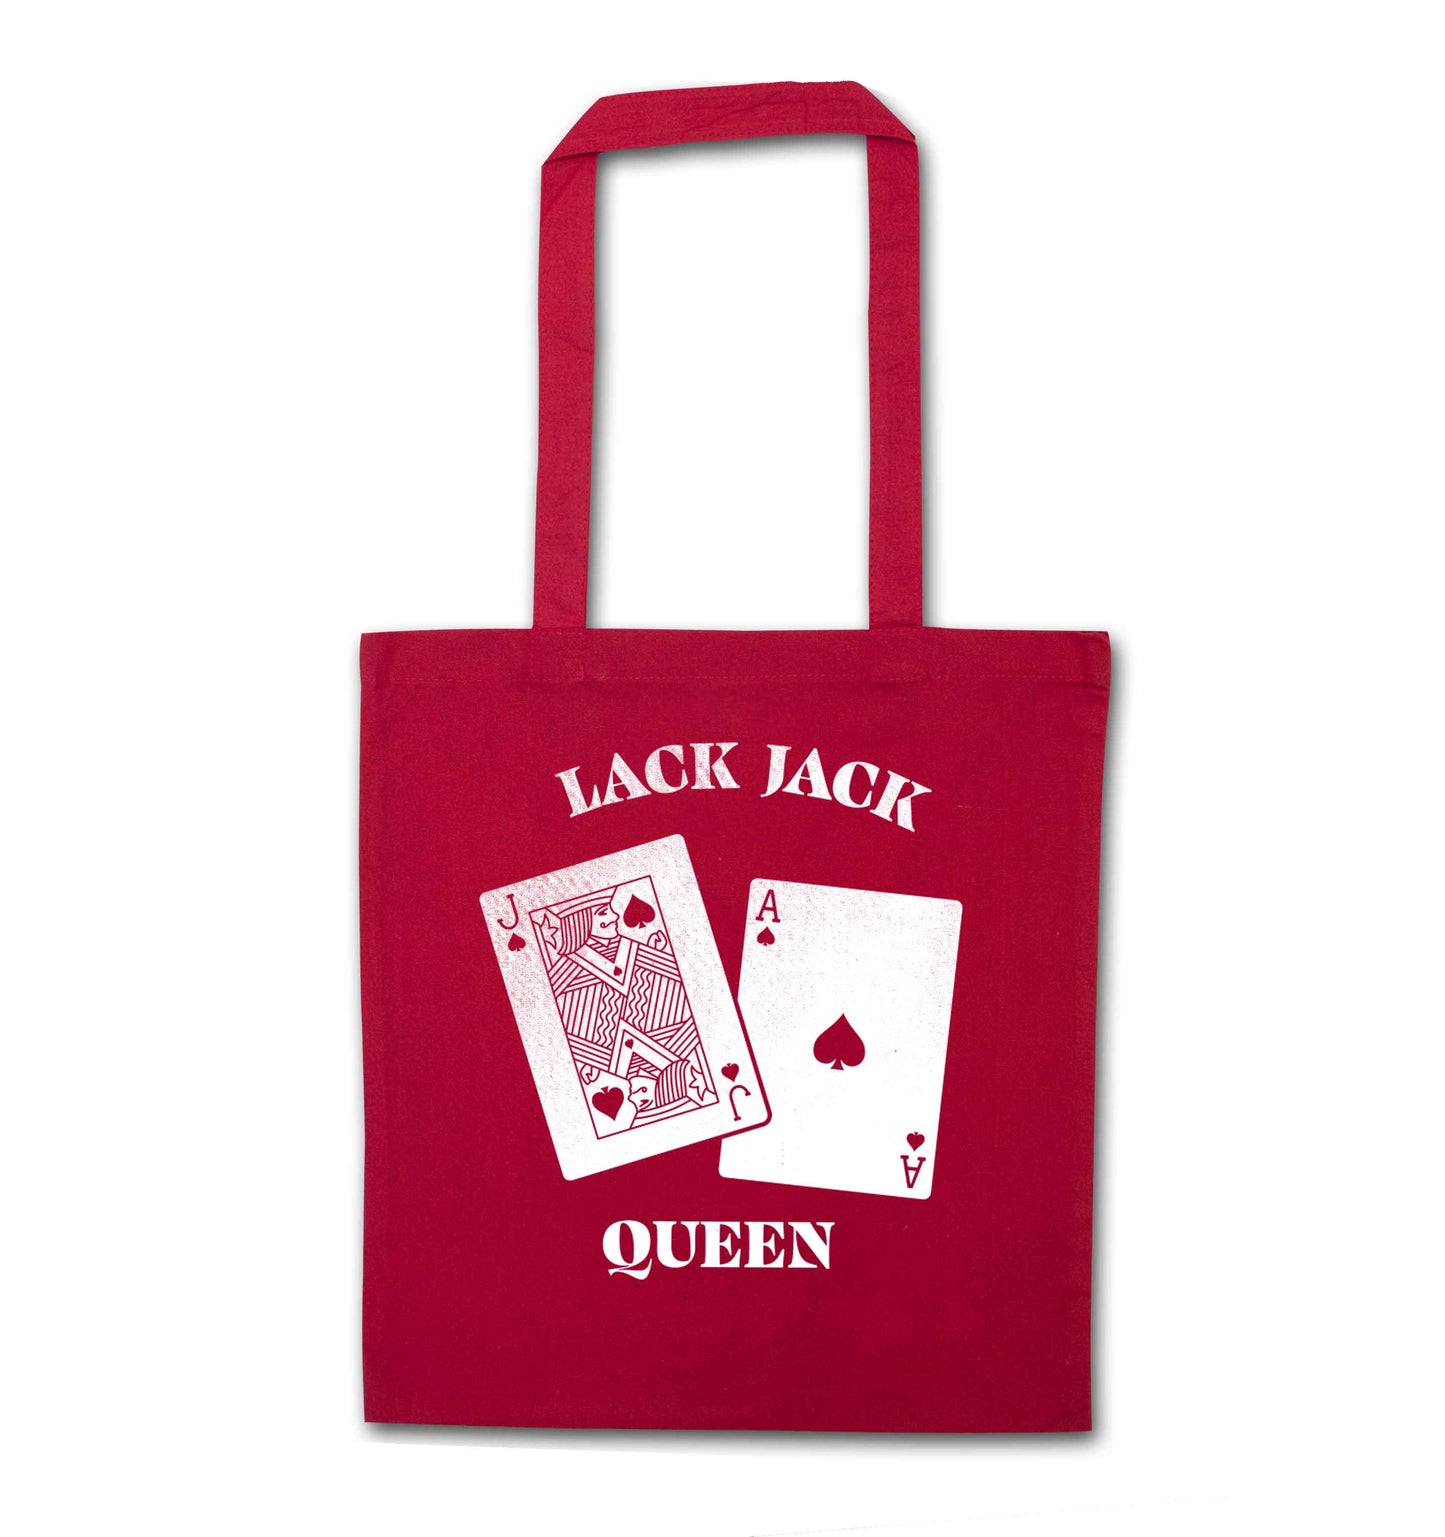 Blackjack queen red tote bag